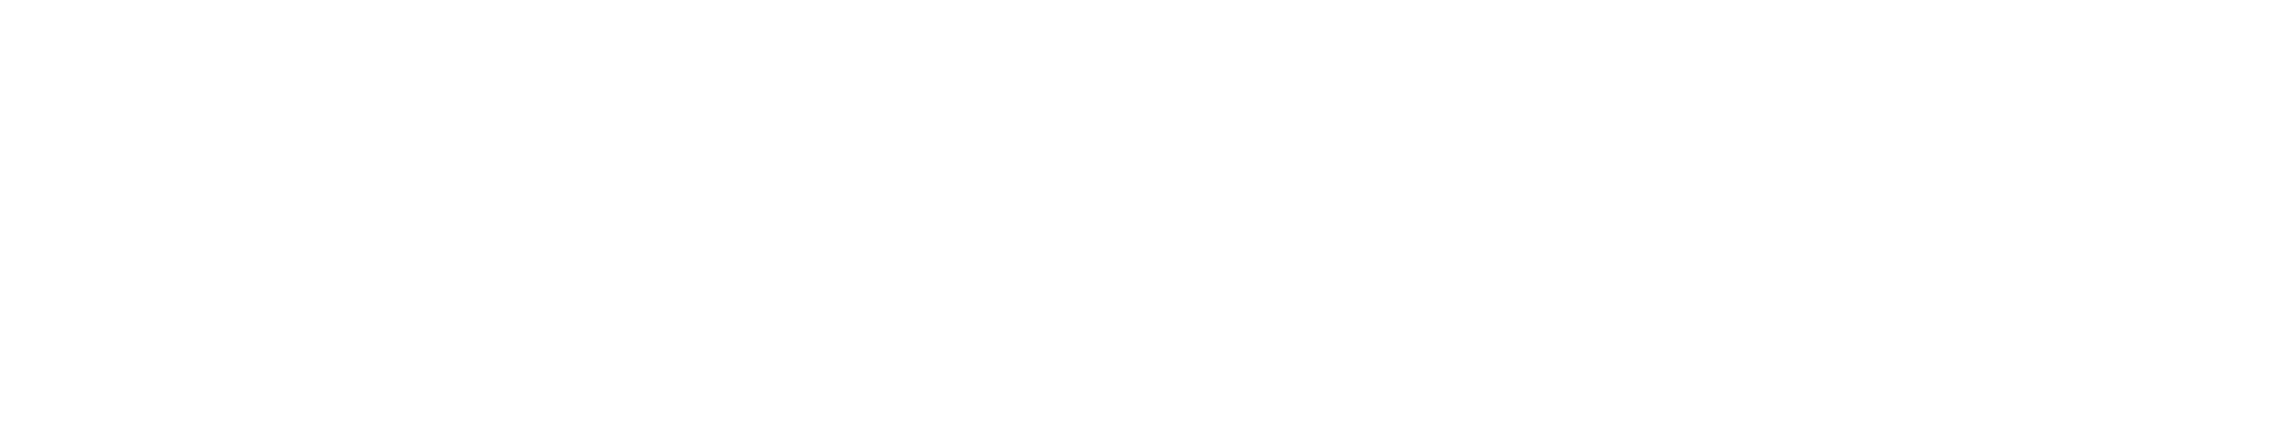 vokalt_logo